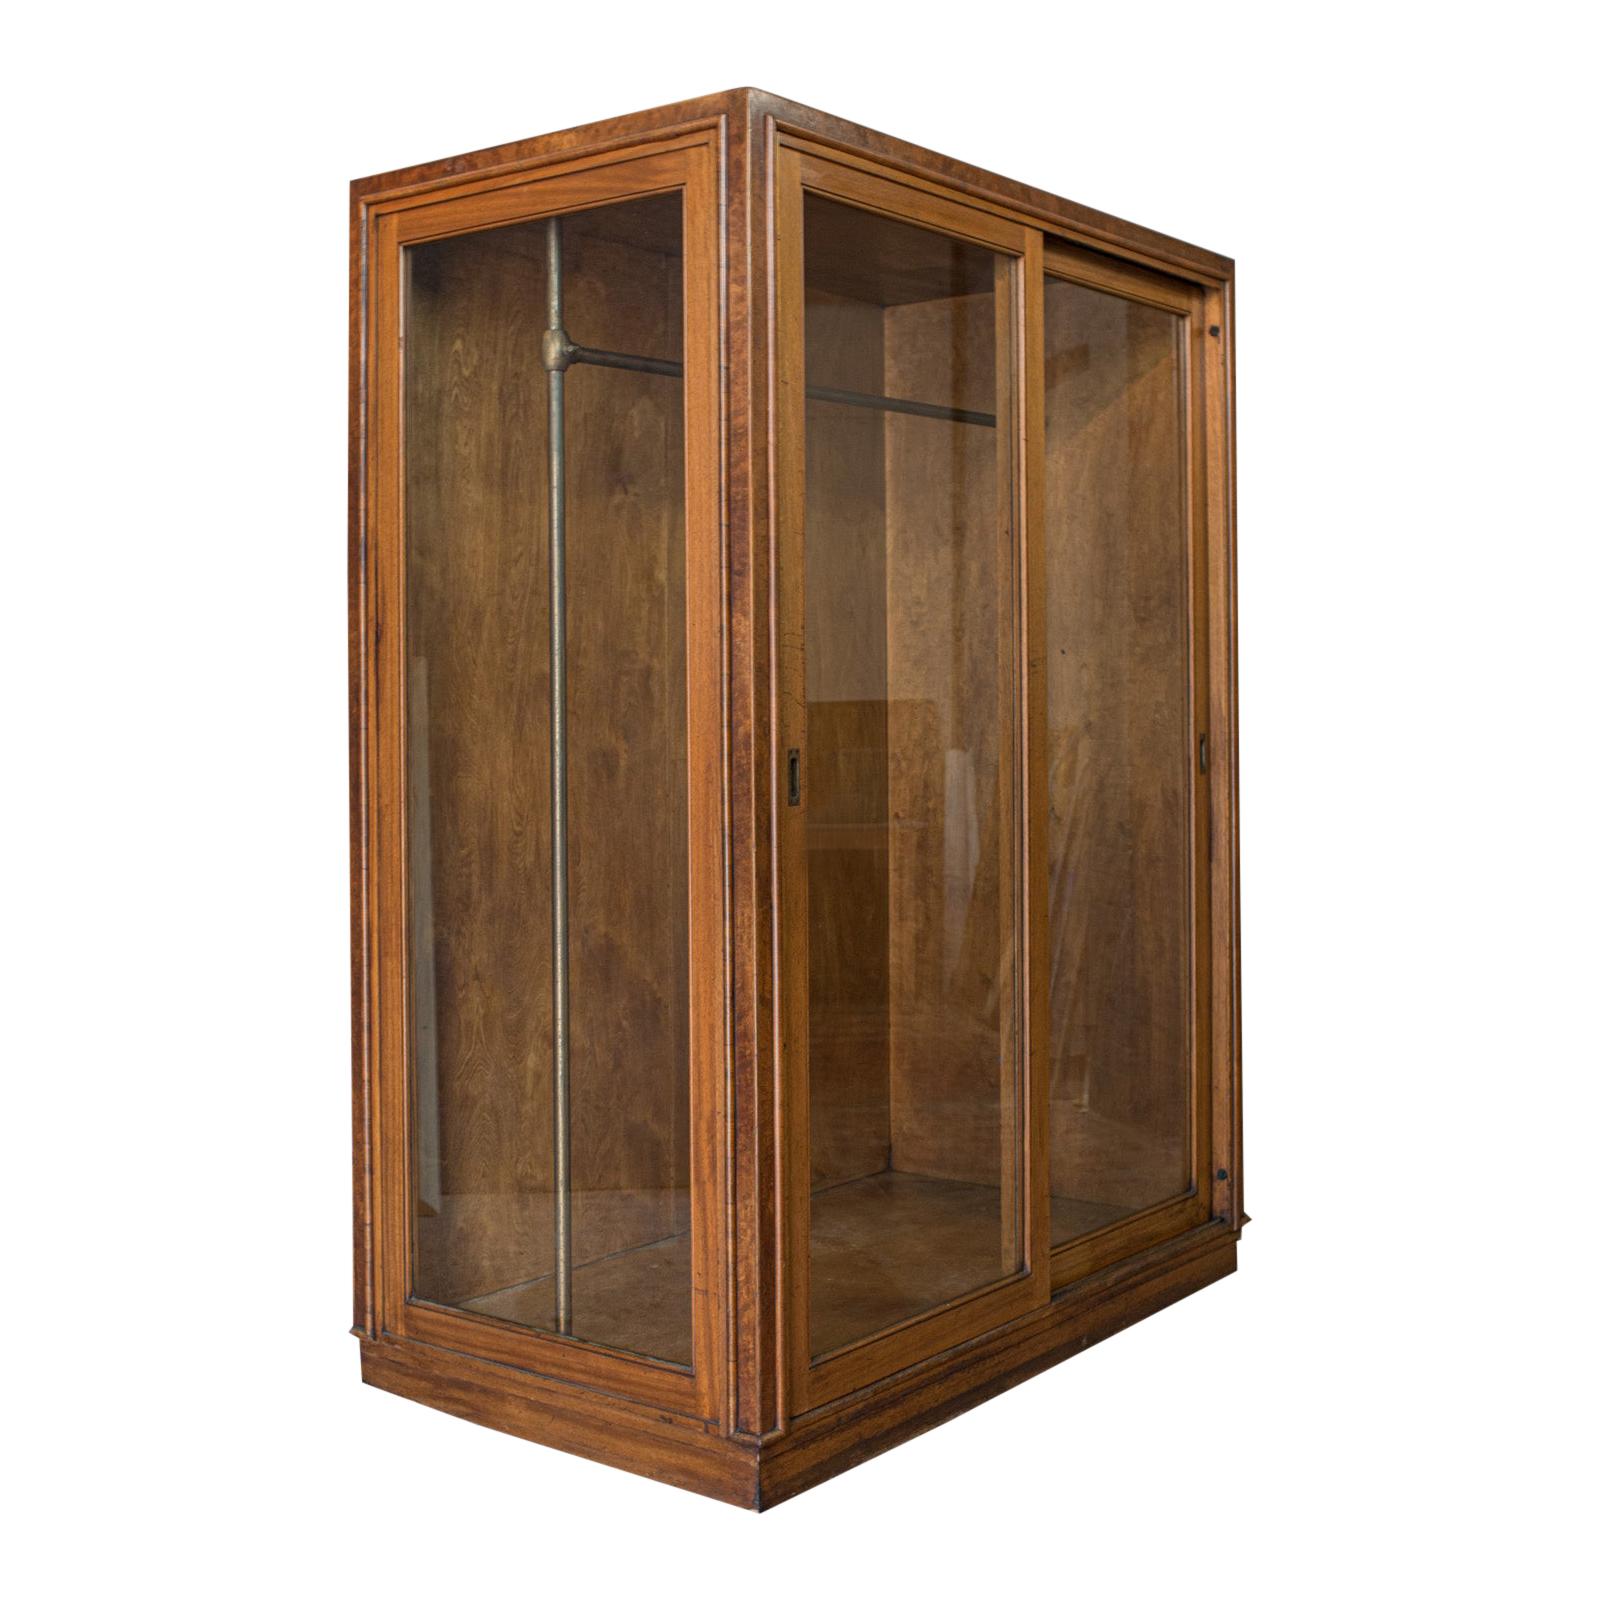 Antique Glazed Wardrobe Cabinet, Oak, Retail Shop Fitting, Display, circa 1900